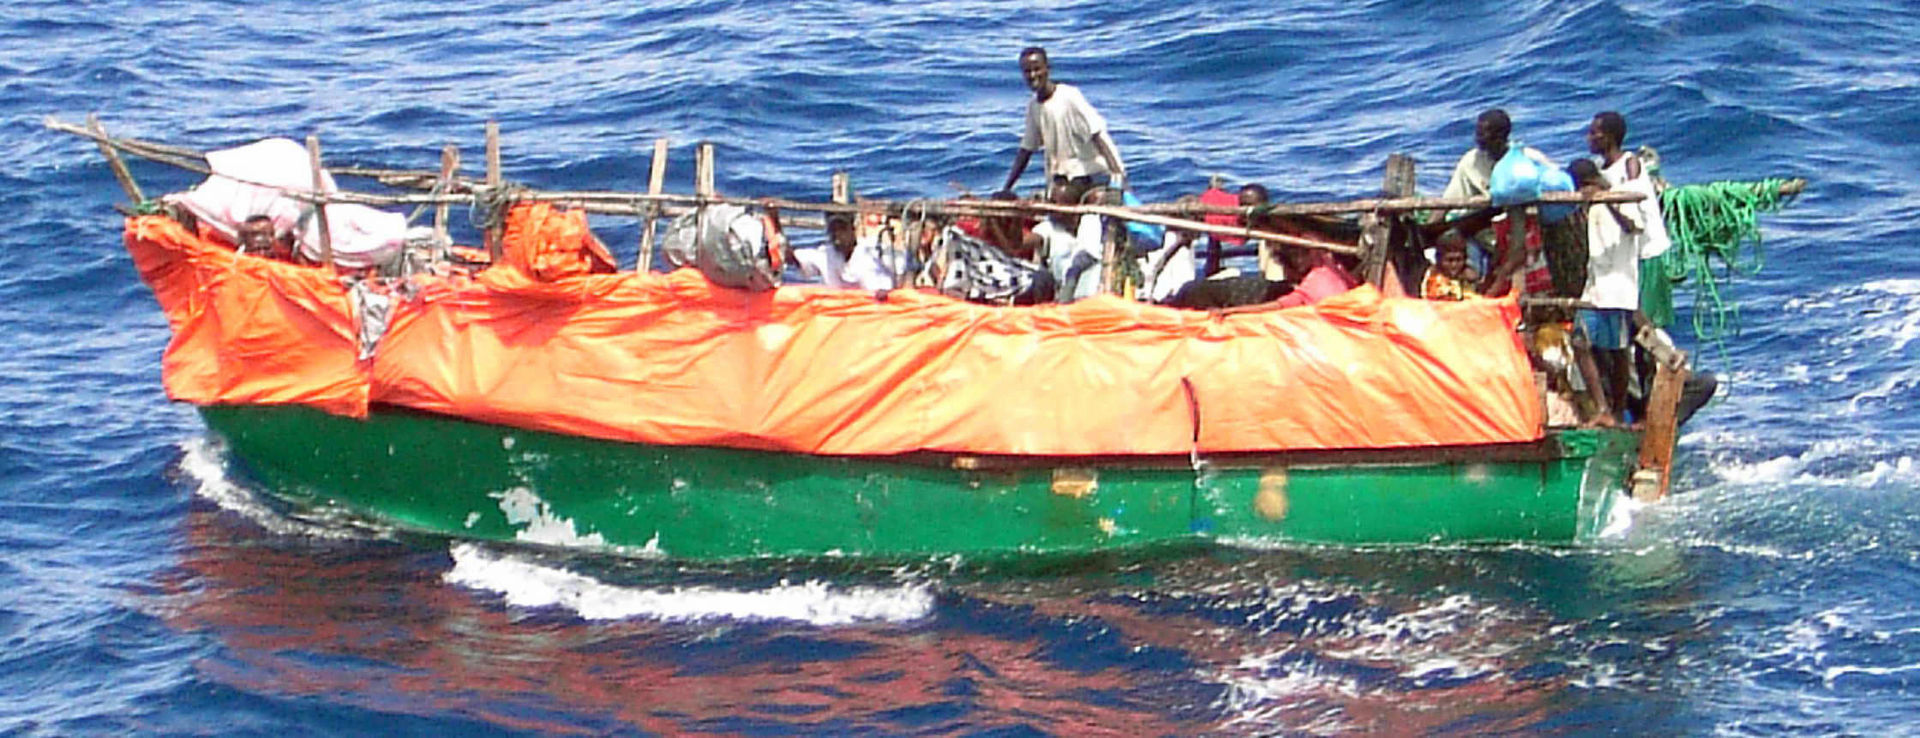 somali_refugee_boat